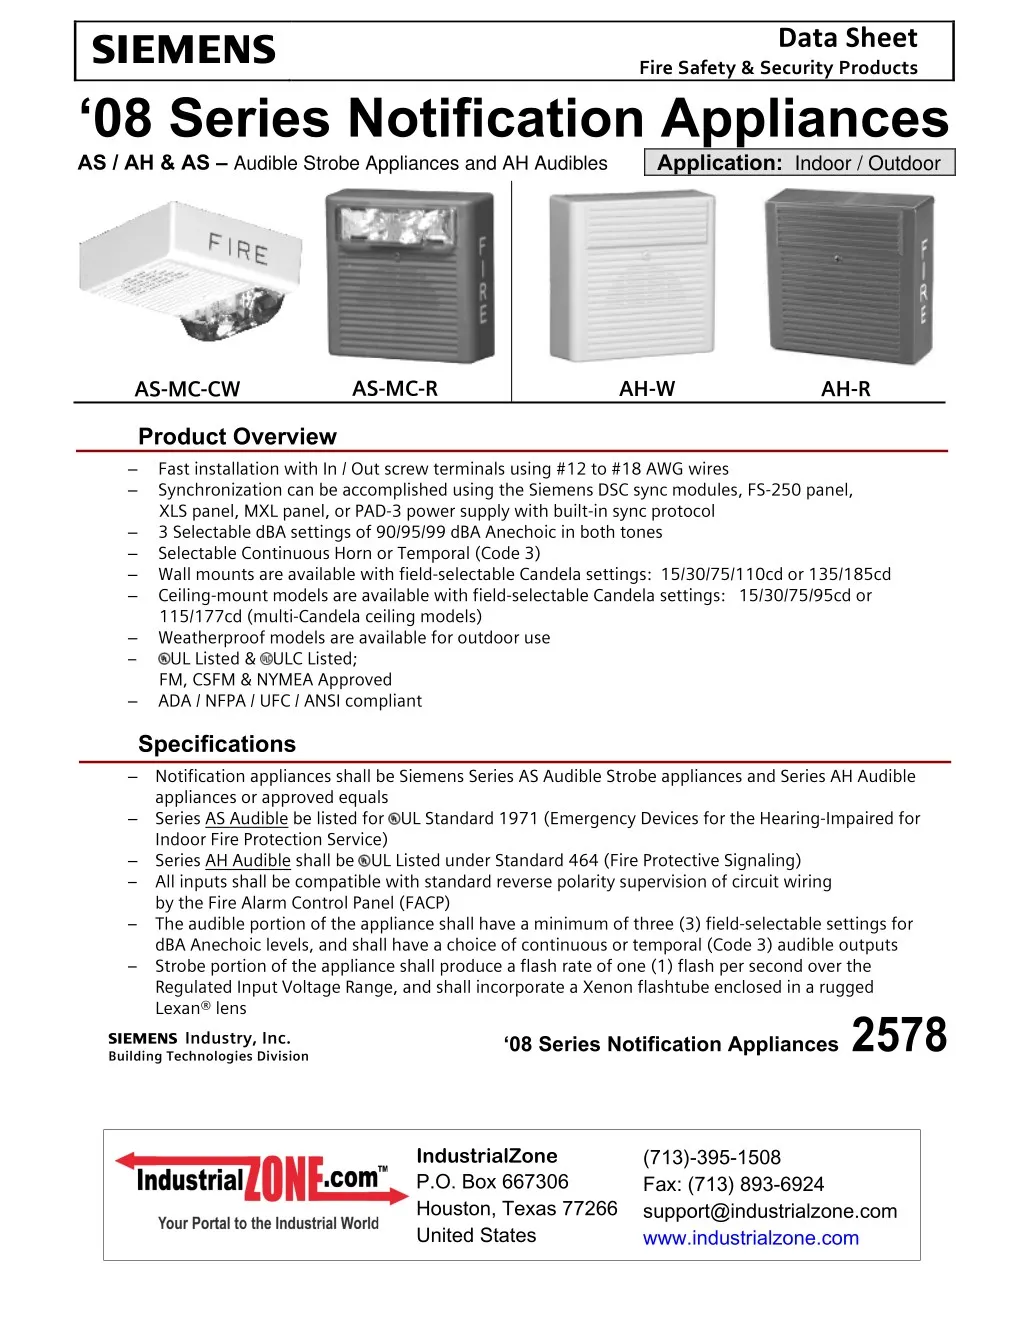 s 08 series notification appliances